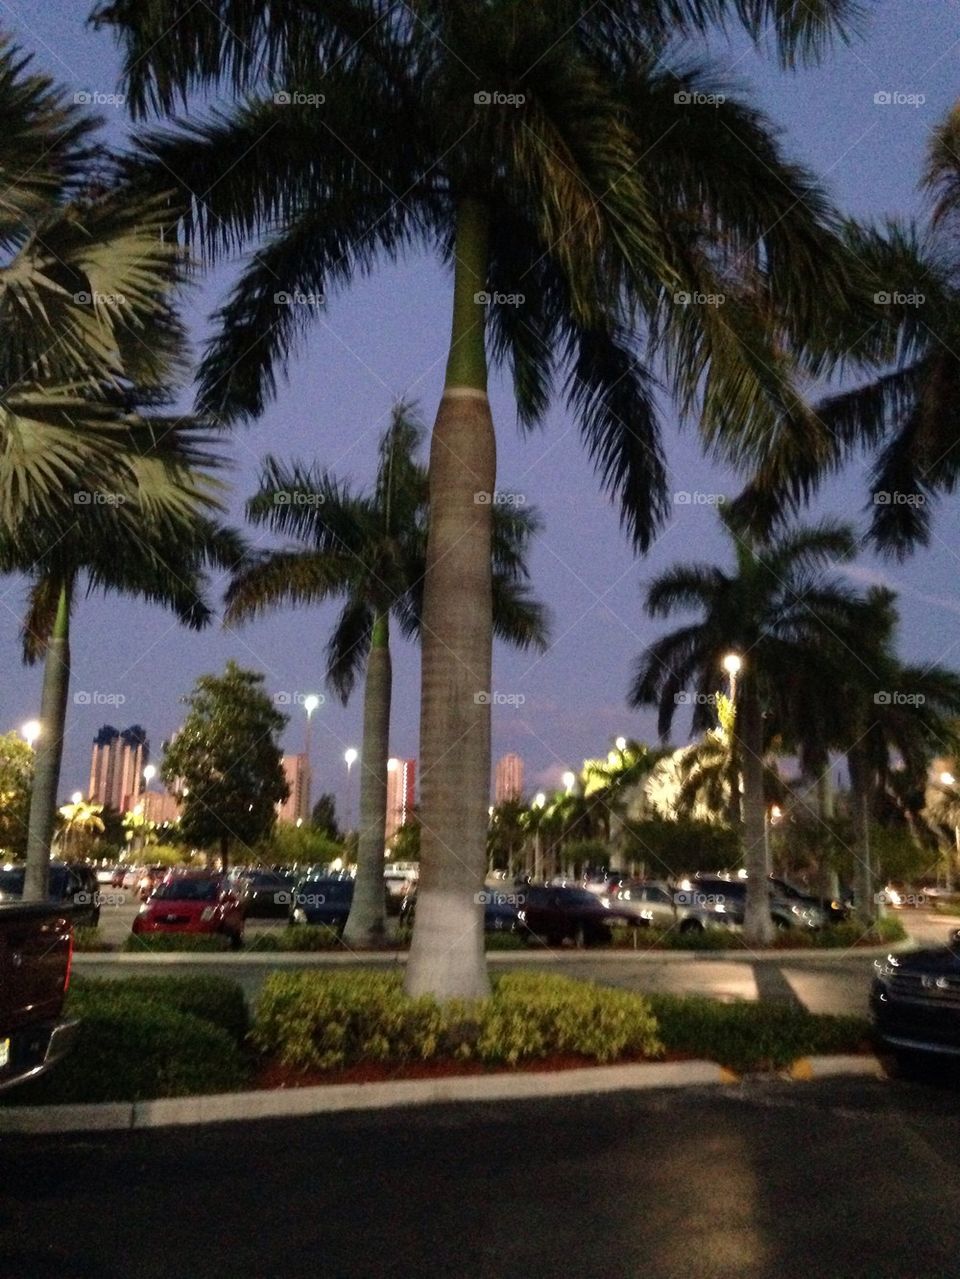 Magnificent Palms of Miami